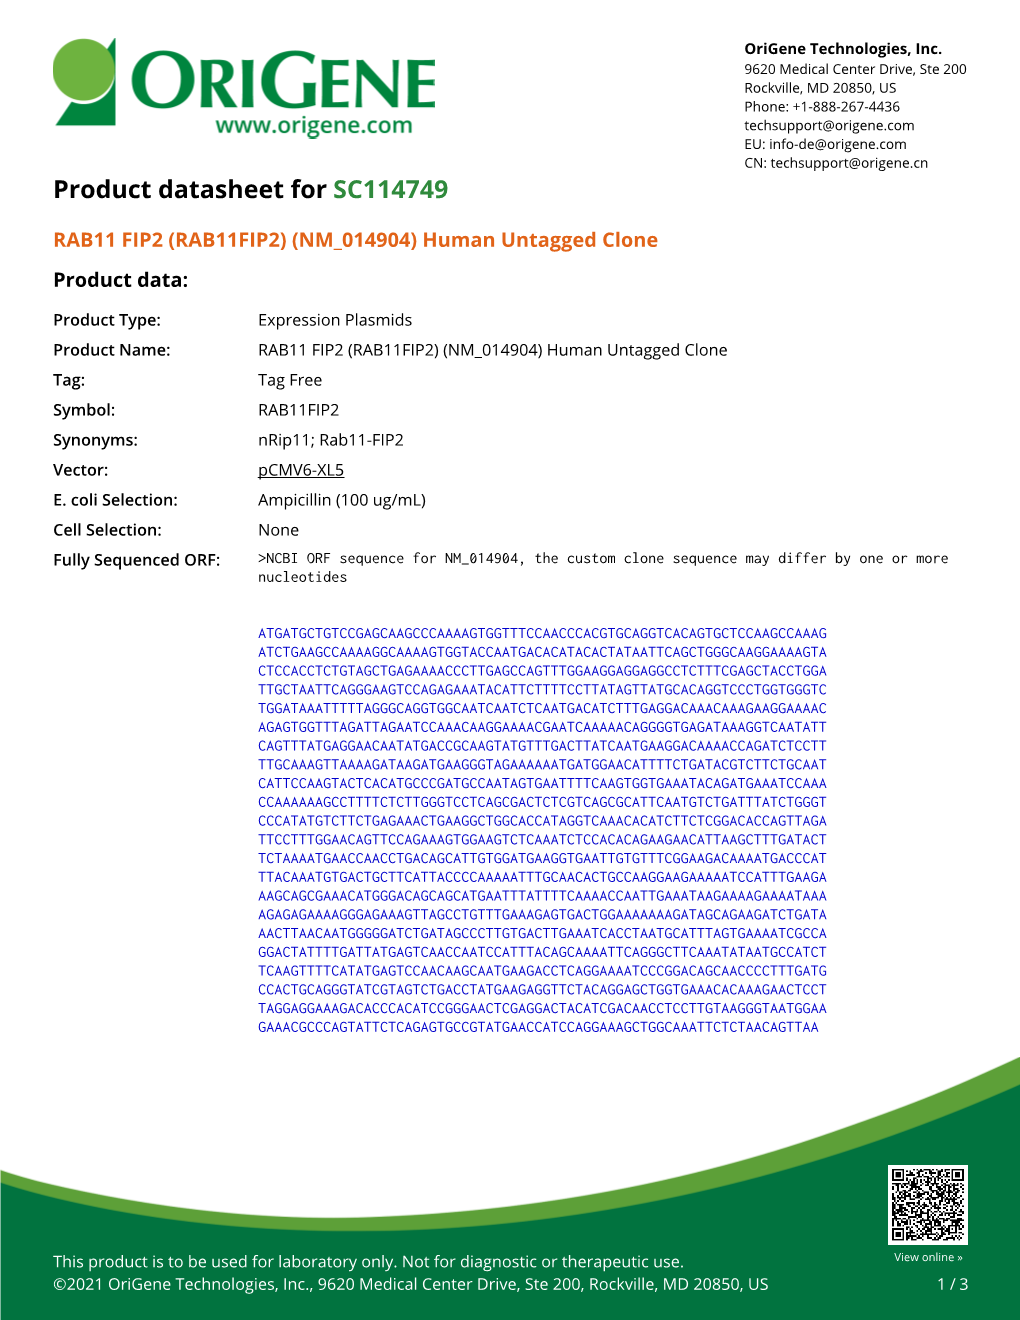 RAB11 FIP2 (RAB11FIP2) (NM 014904) Human Untagged Clone – SC114749 | Origene